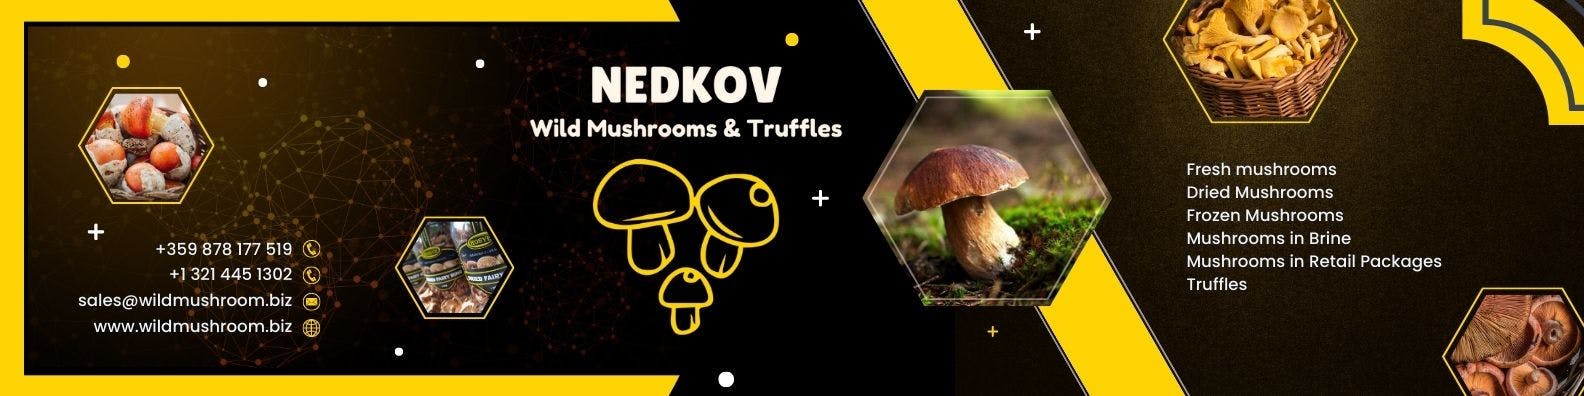 Wild Mushroom Ltd's banner